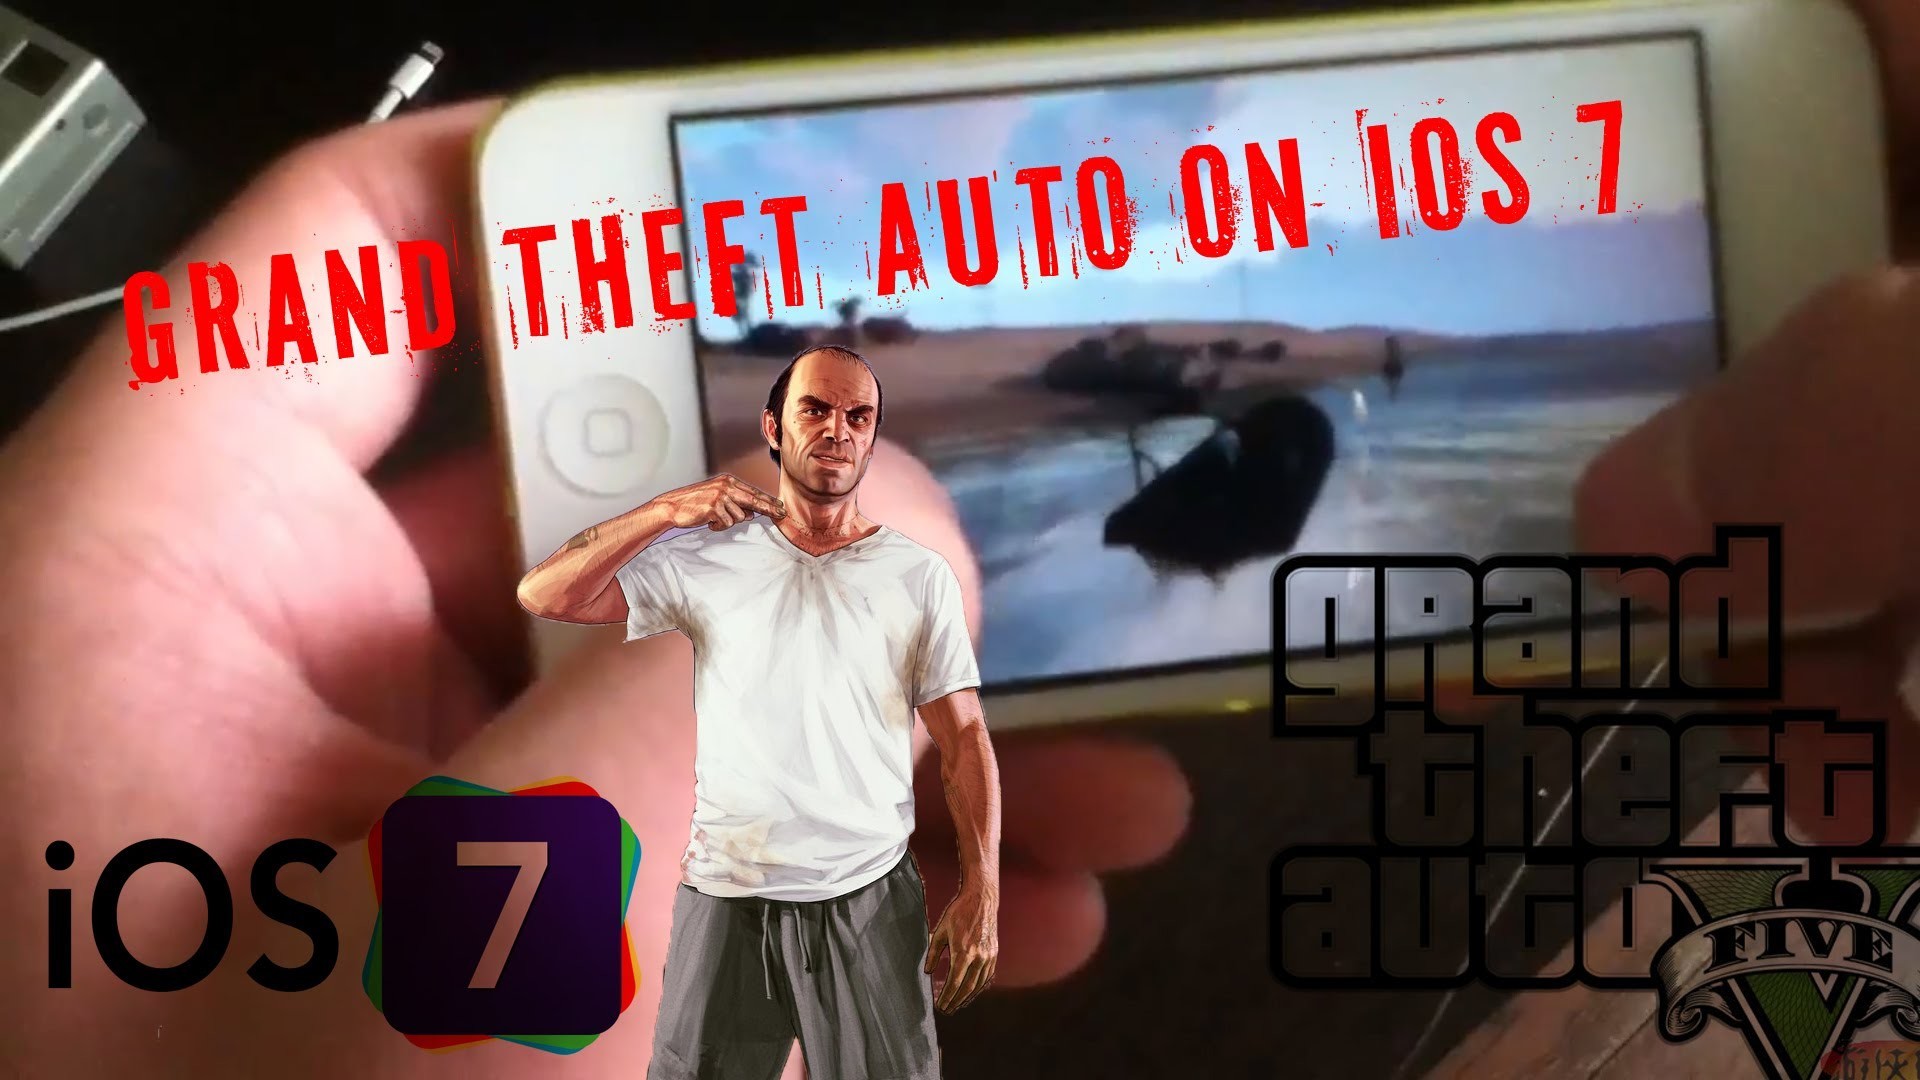 GTA 5 (IPHONE 5S) beta Grand Theft Auto 5 IOS 7